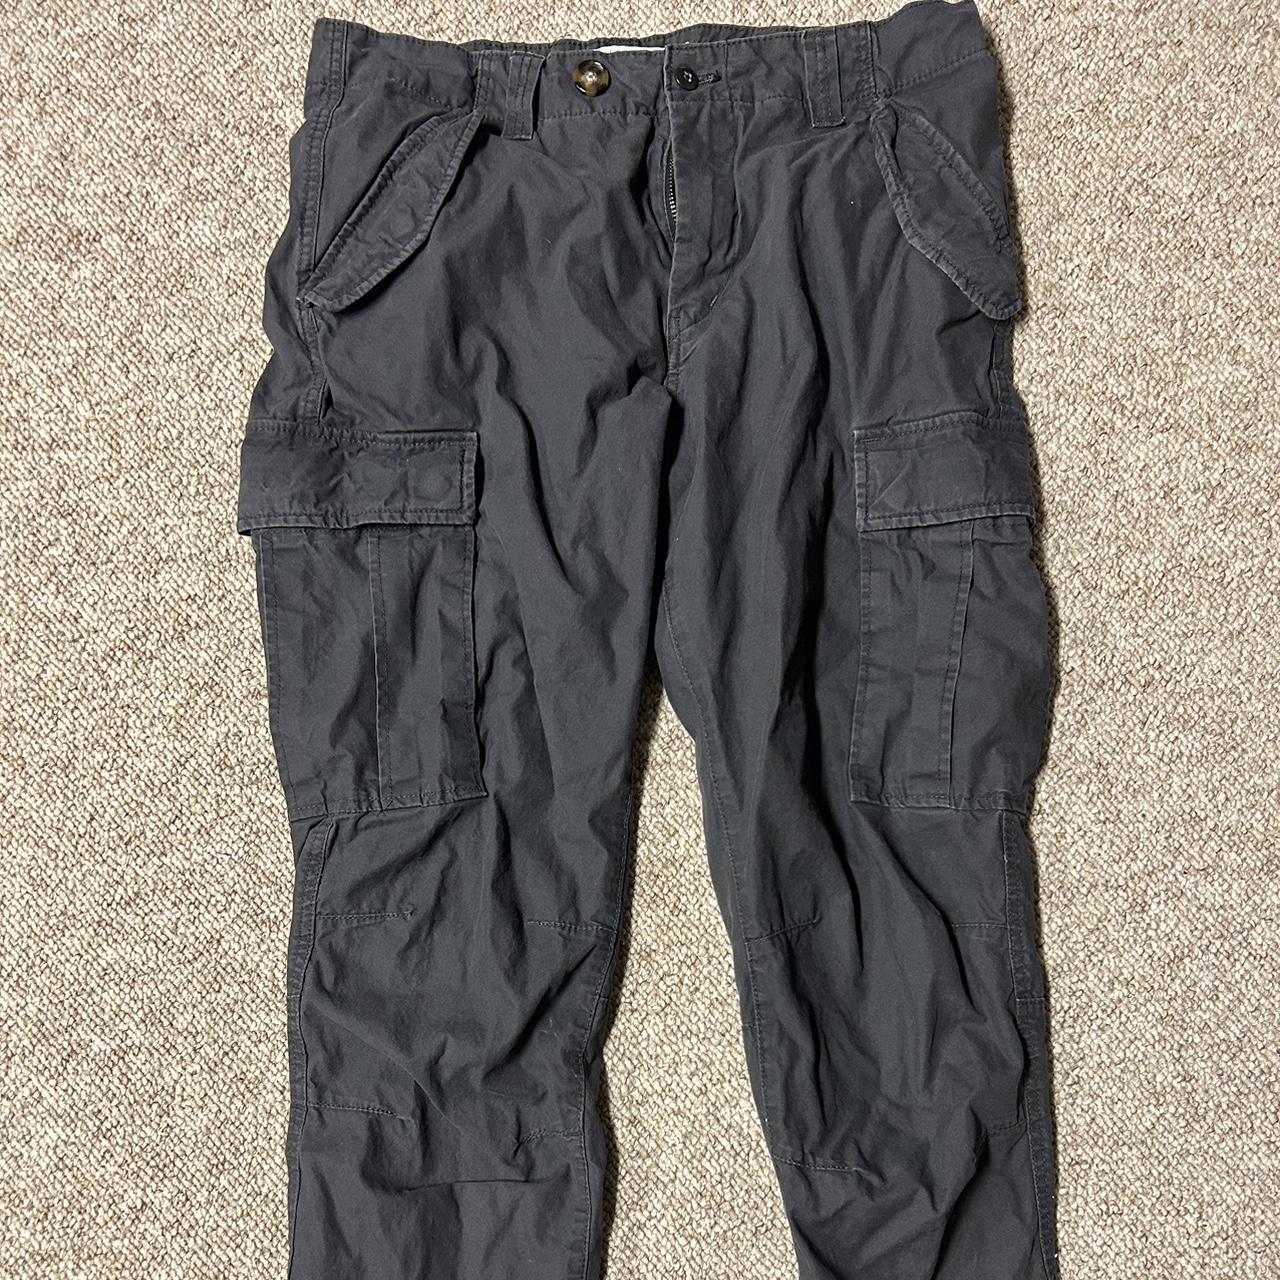 H & M Slim Fit Chino Pants Size 29 X 29 | eBay